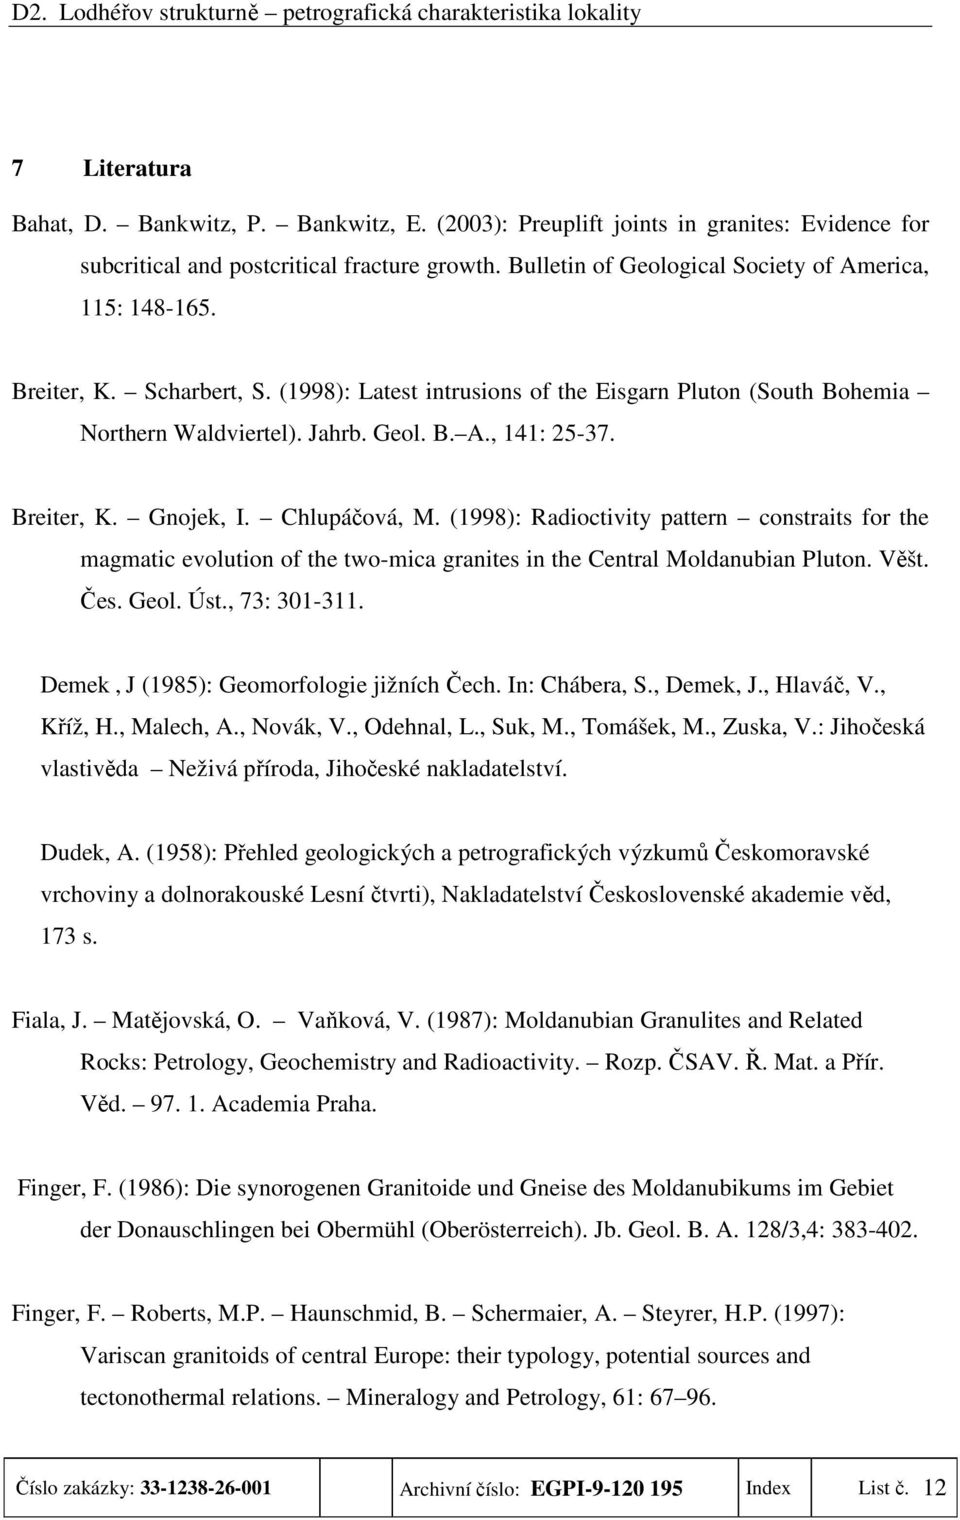 Breiter, K. Gnojek, I. Chlupáčová, M. (1998): Radioctivity pattern constraits for the magmatic evolution of the two-mica granites in the Central Moldanubian Pluton. Věšt. Čes. Geol. Úst., 73: 301-311.